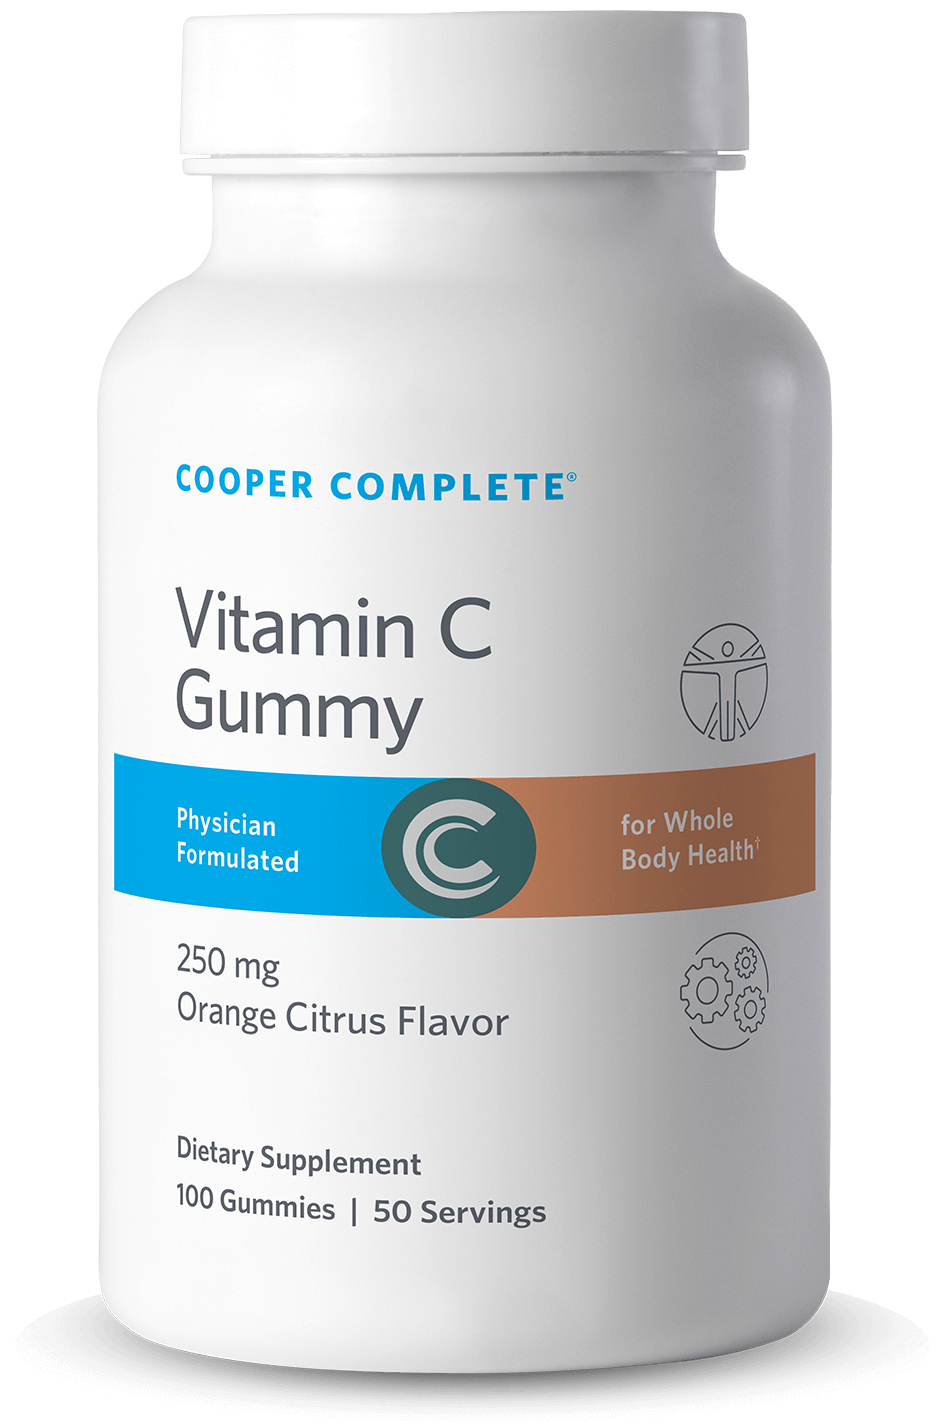 Photo of Cooper Complete Vitamin C Gummy Supplement bottle